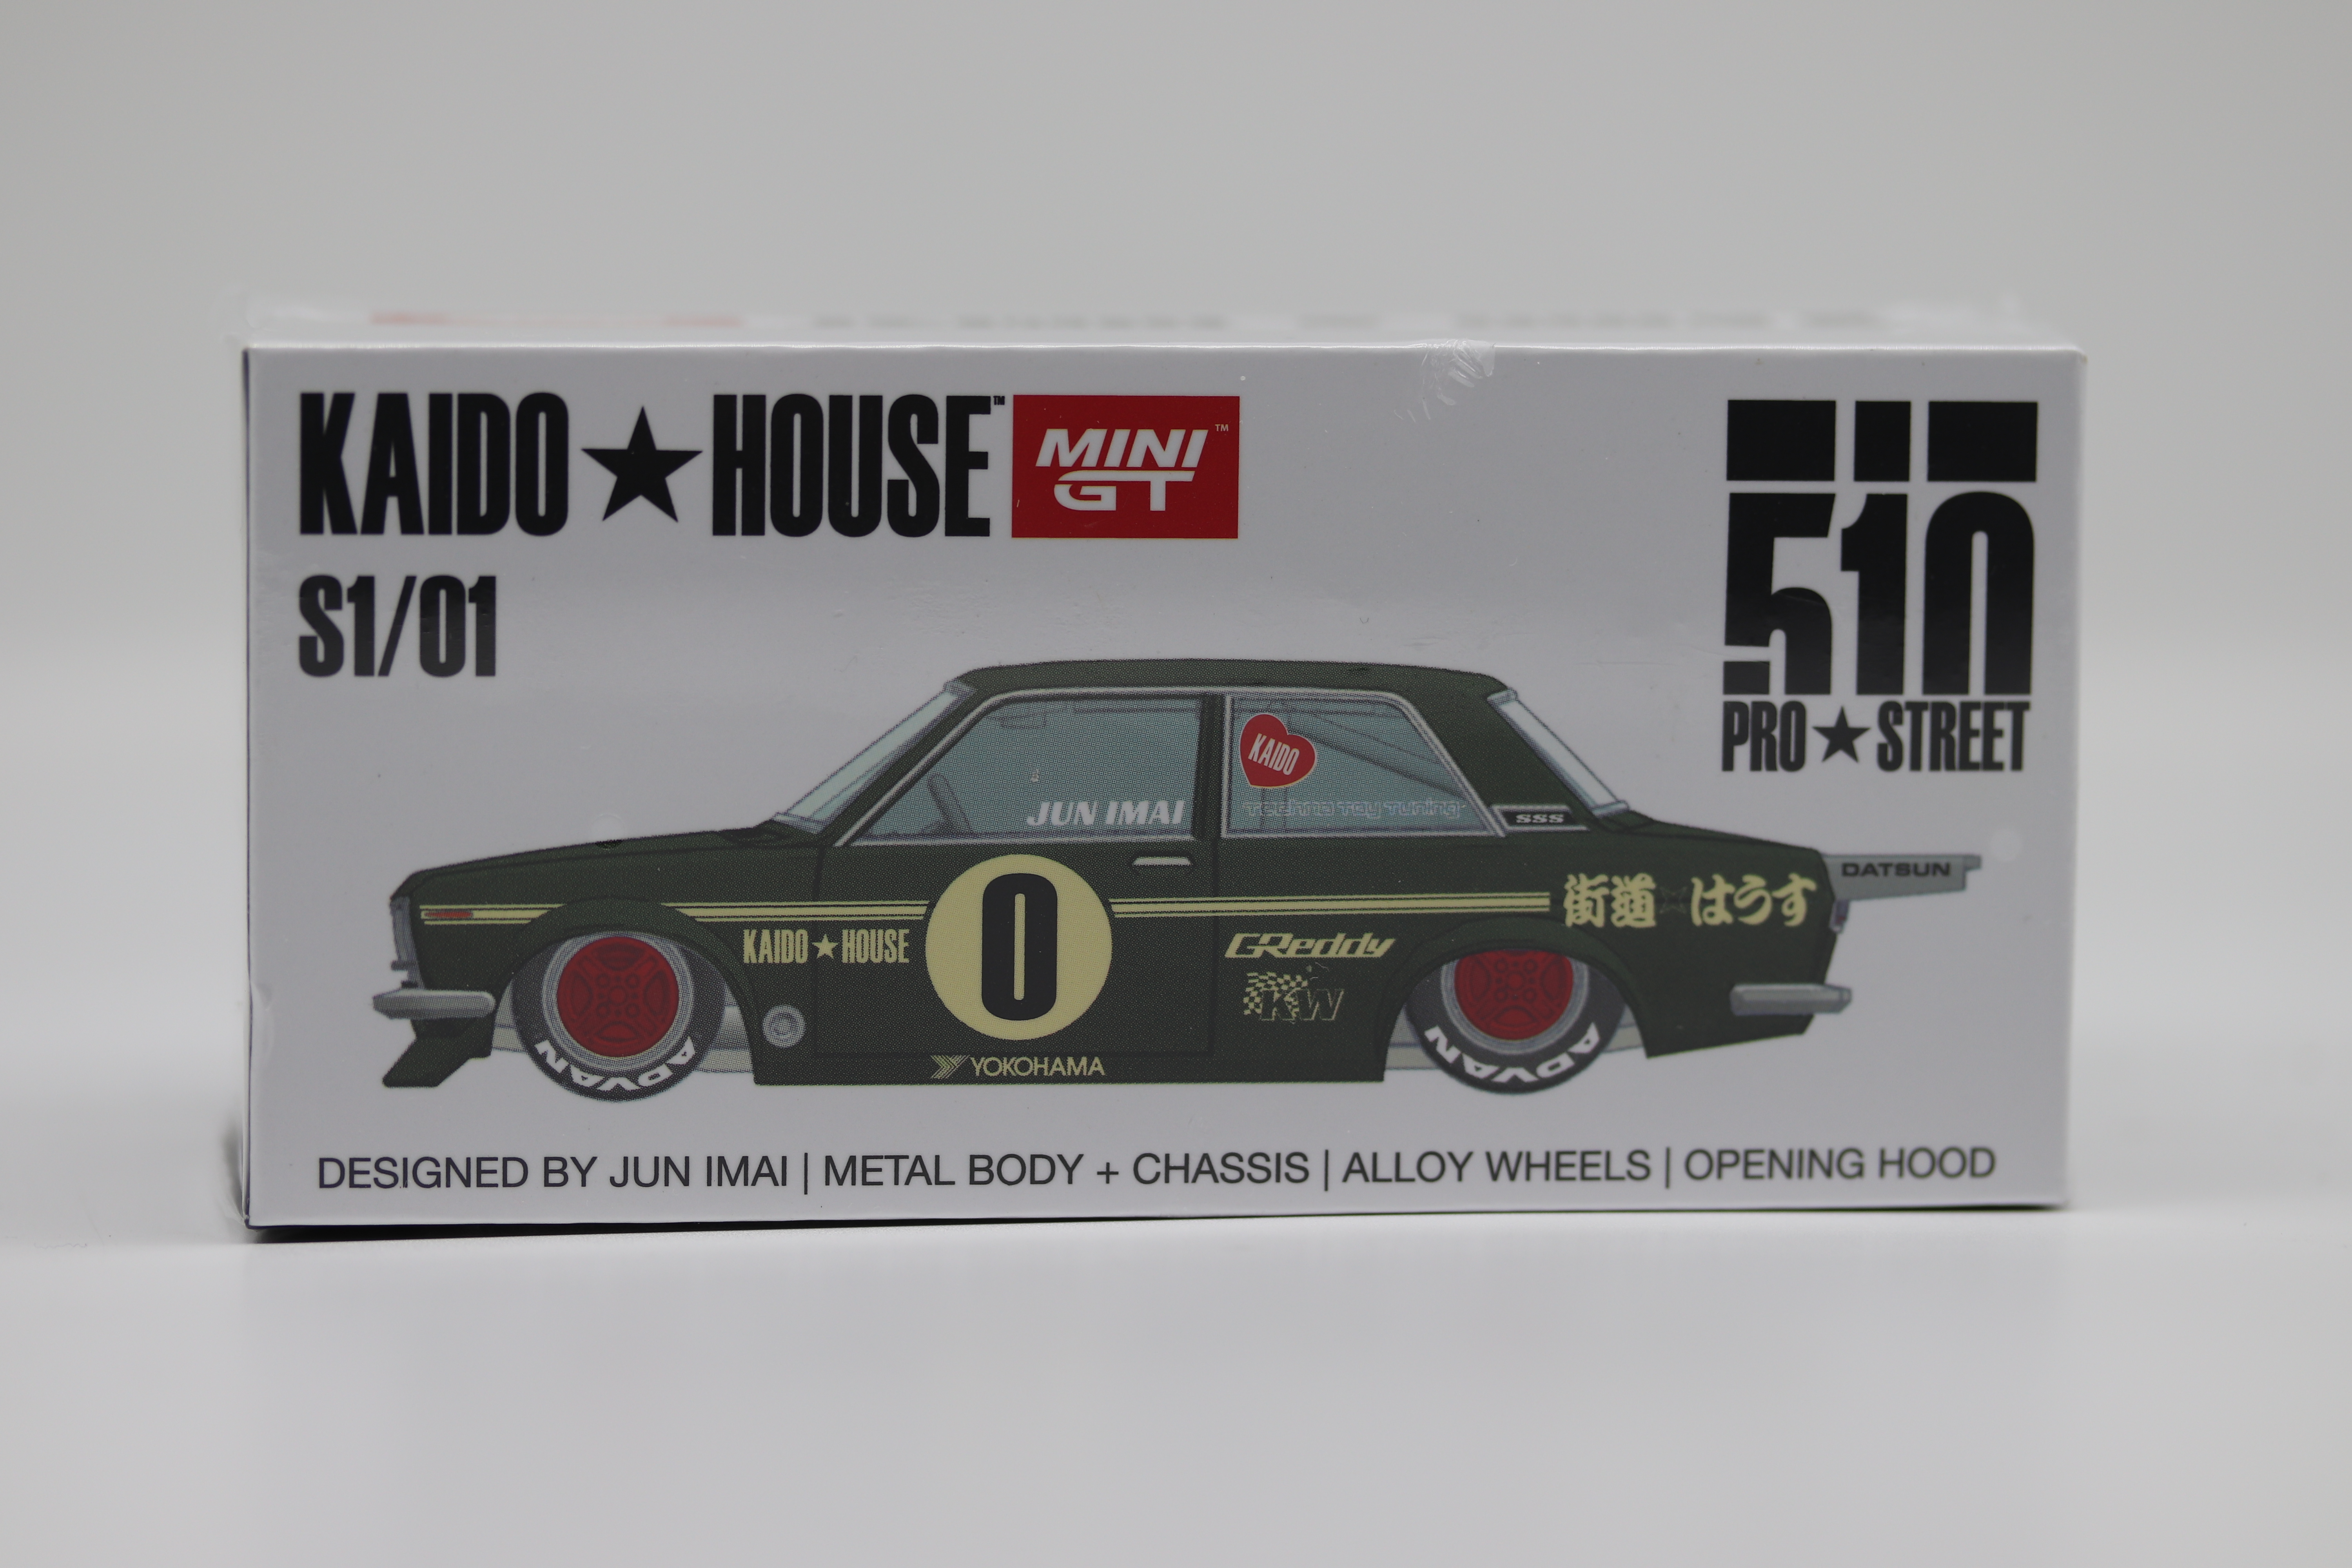 Mini GT x Kaido House 1:64 Datsun 510 Pro Street OG Green